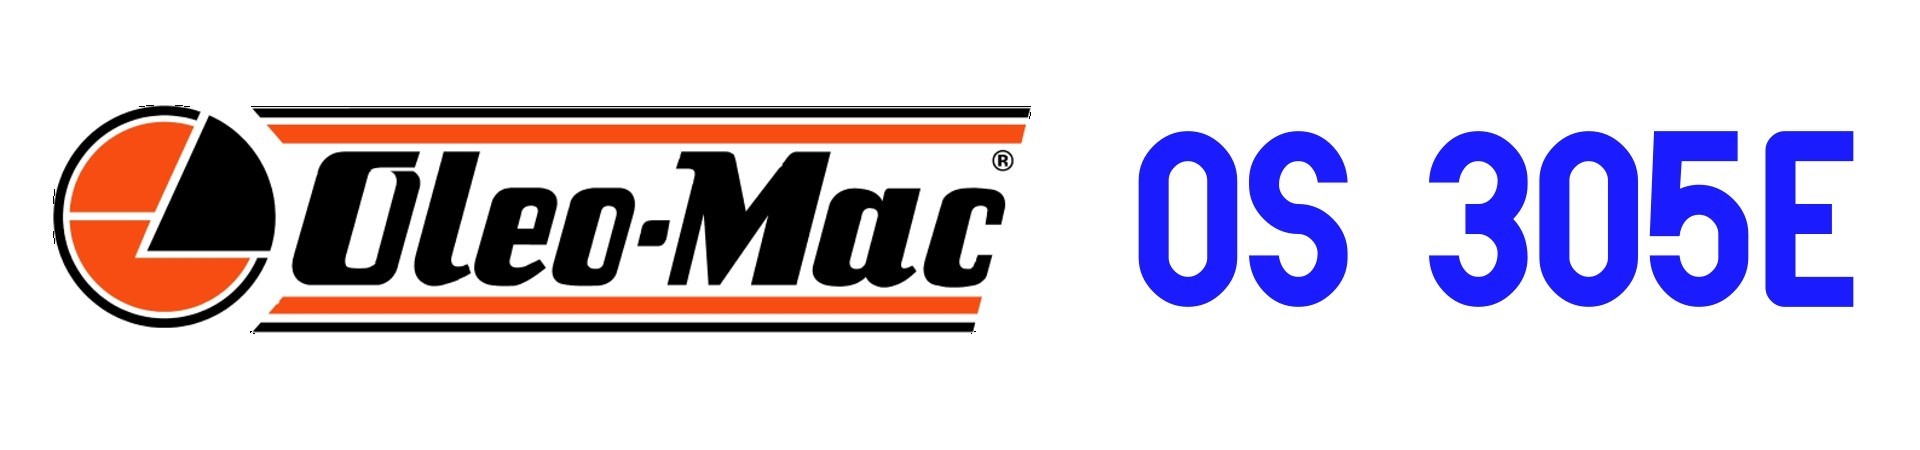 RECAMBIOS Vareador Oleo Mac OS305E al Mejor PRECIO